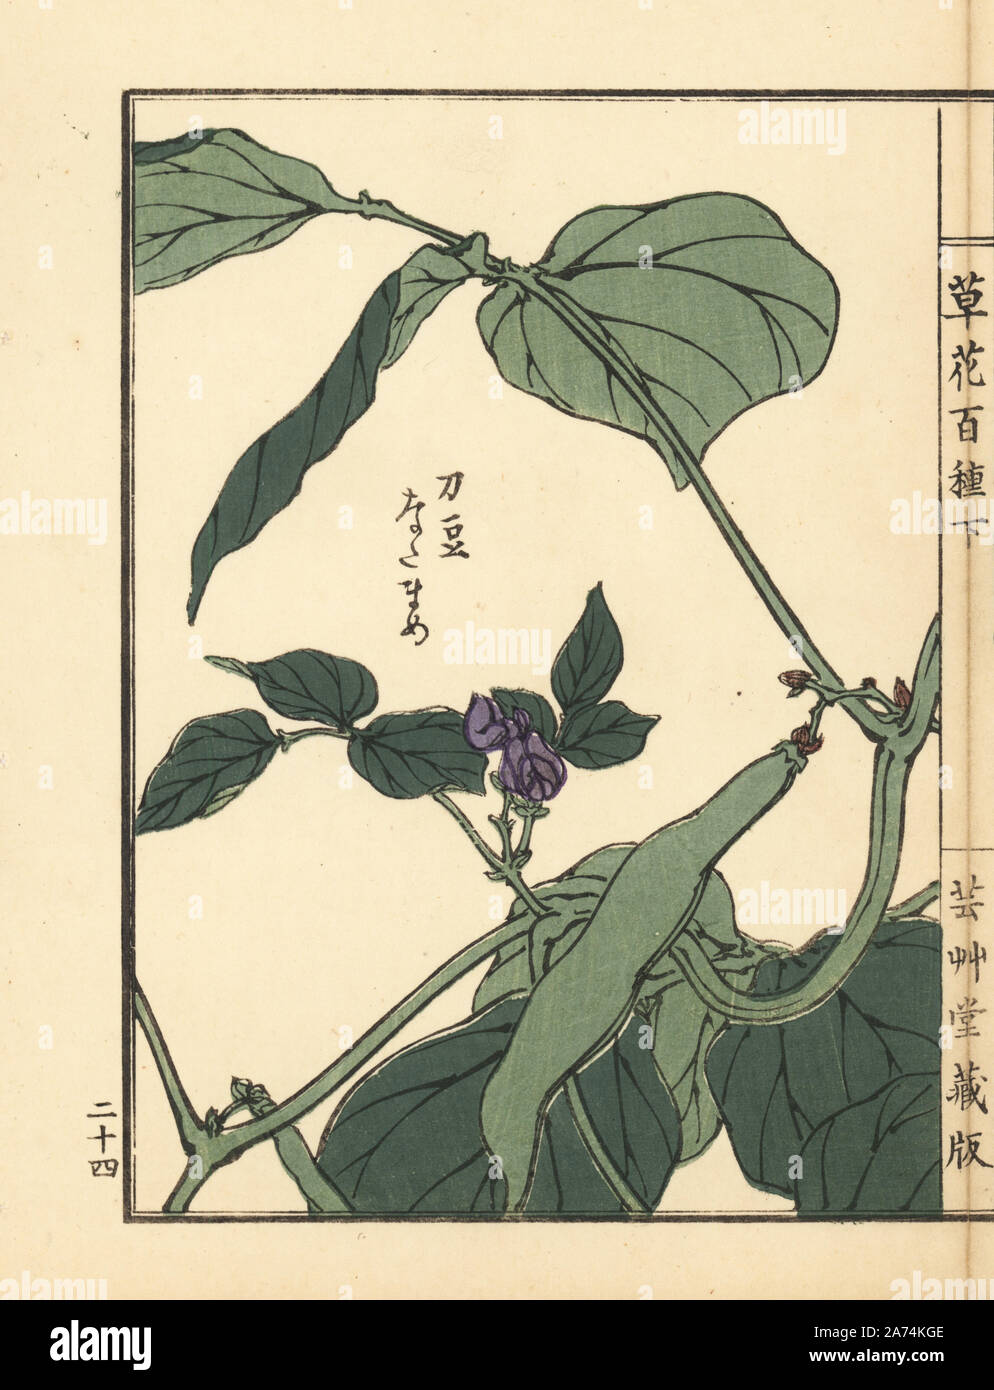 Natamame or sword bean, Canavalia gladiata. Handcoloured woodblock print by Kono Bairei from Kusa Bana Hyakushu (One Hundred Varieties of Flowers), Tokyo, Yamada, 1901. Stock Photo